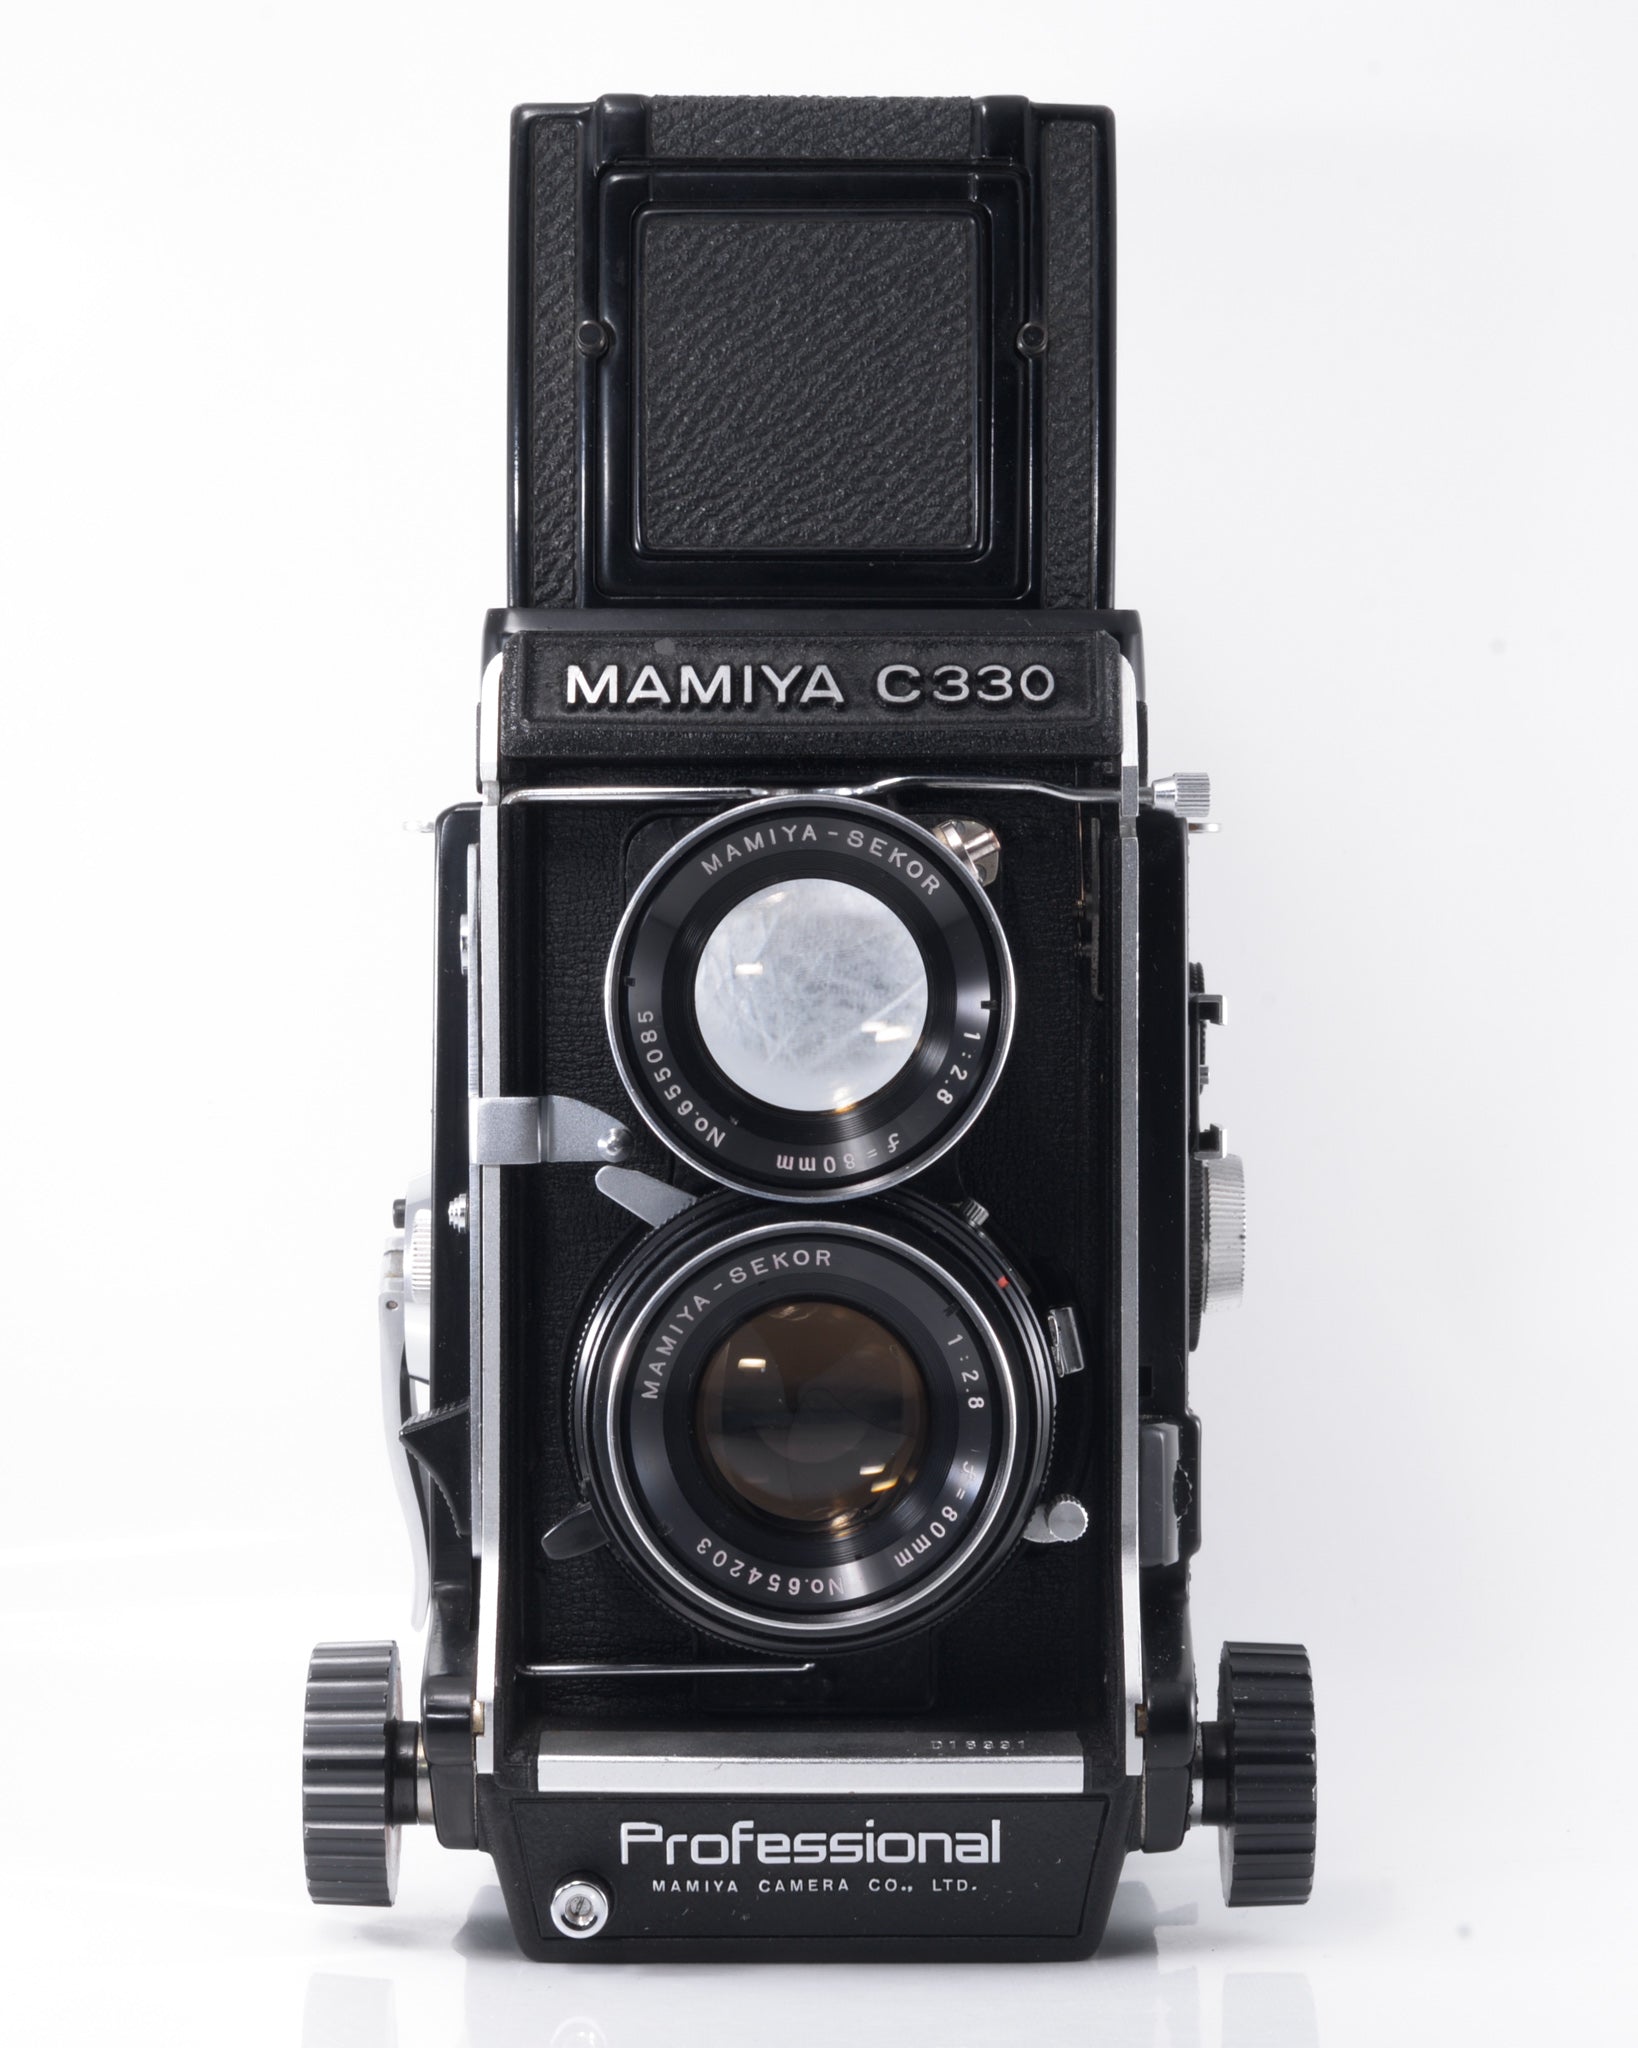 Mamiya C330 PROFESSIONALブルードット 80mm F2.8